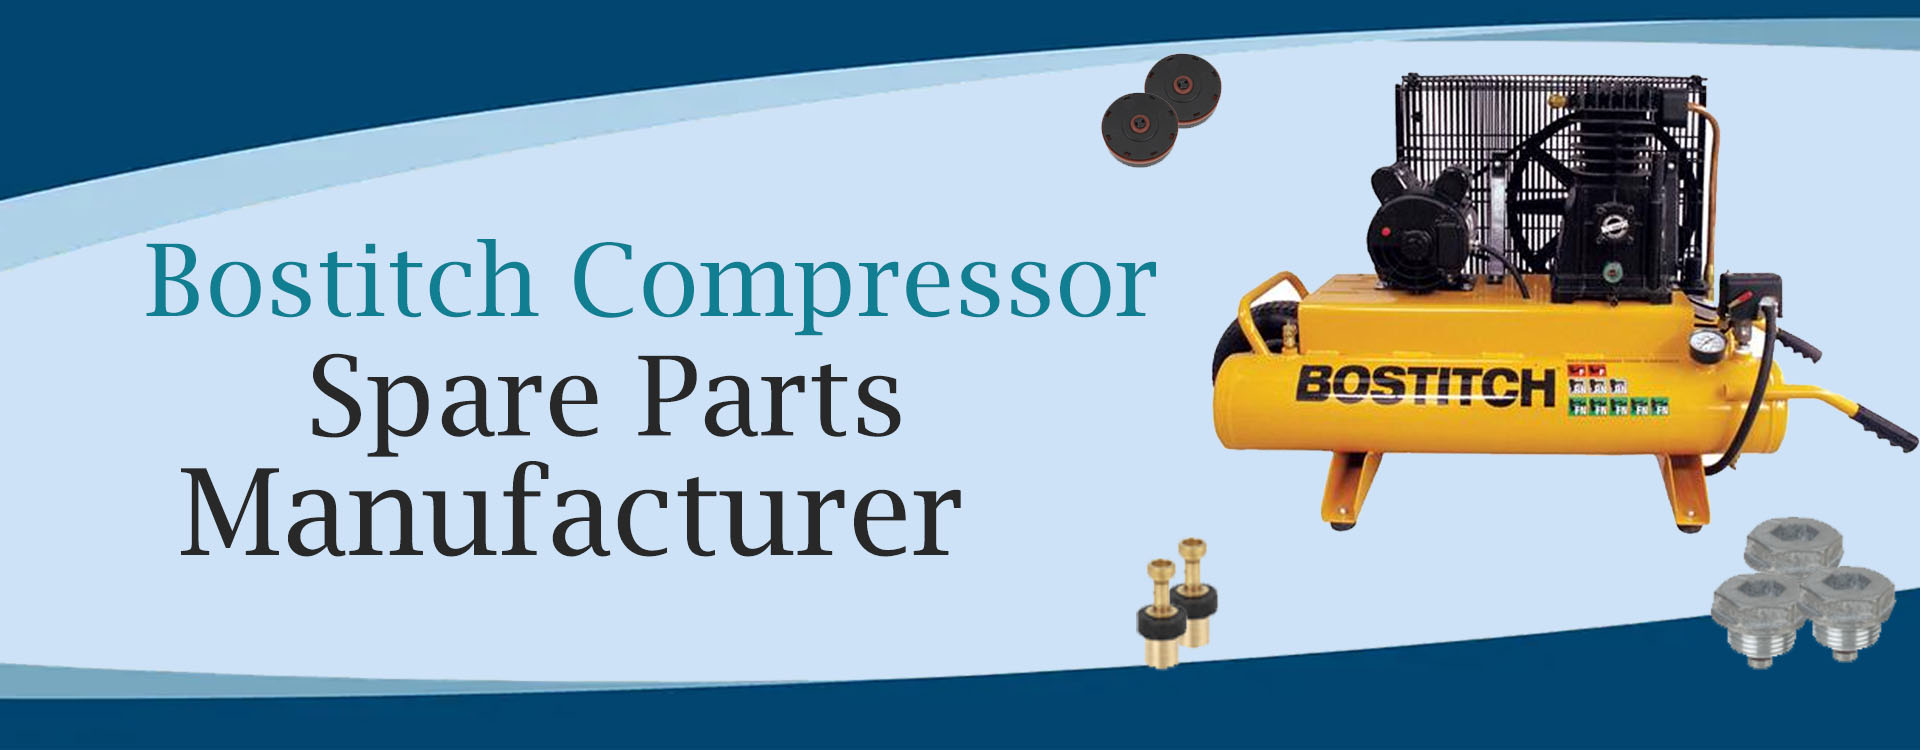 Bostitch  Compressor Part Manufacturer